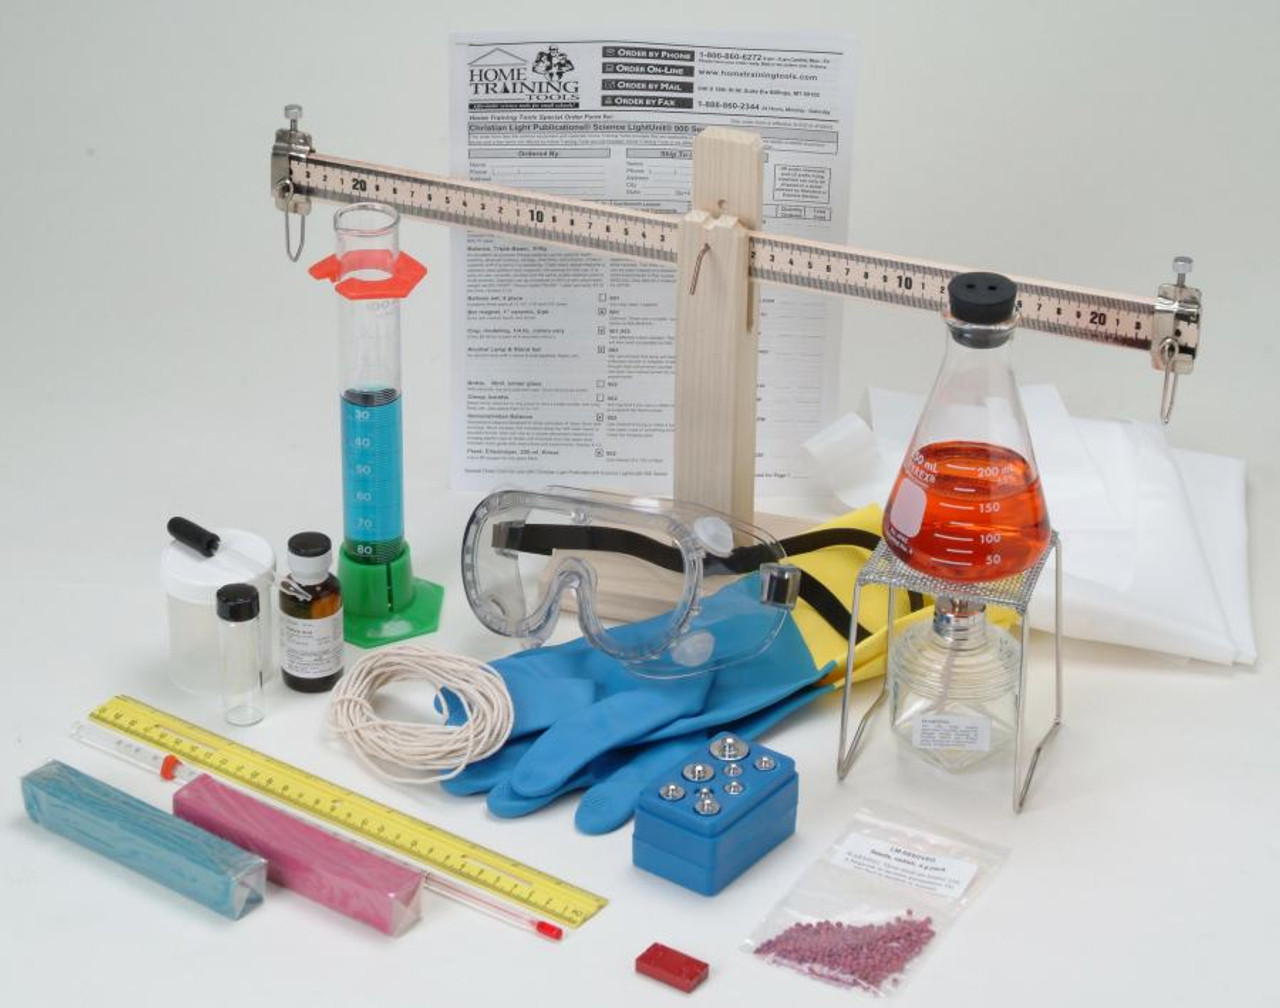 Medical Laboratory Equipment, Chemistry Lab Supplies, Testing